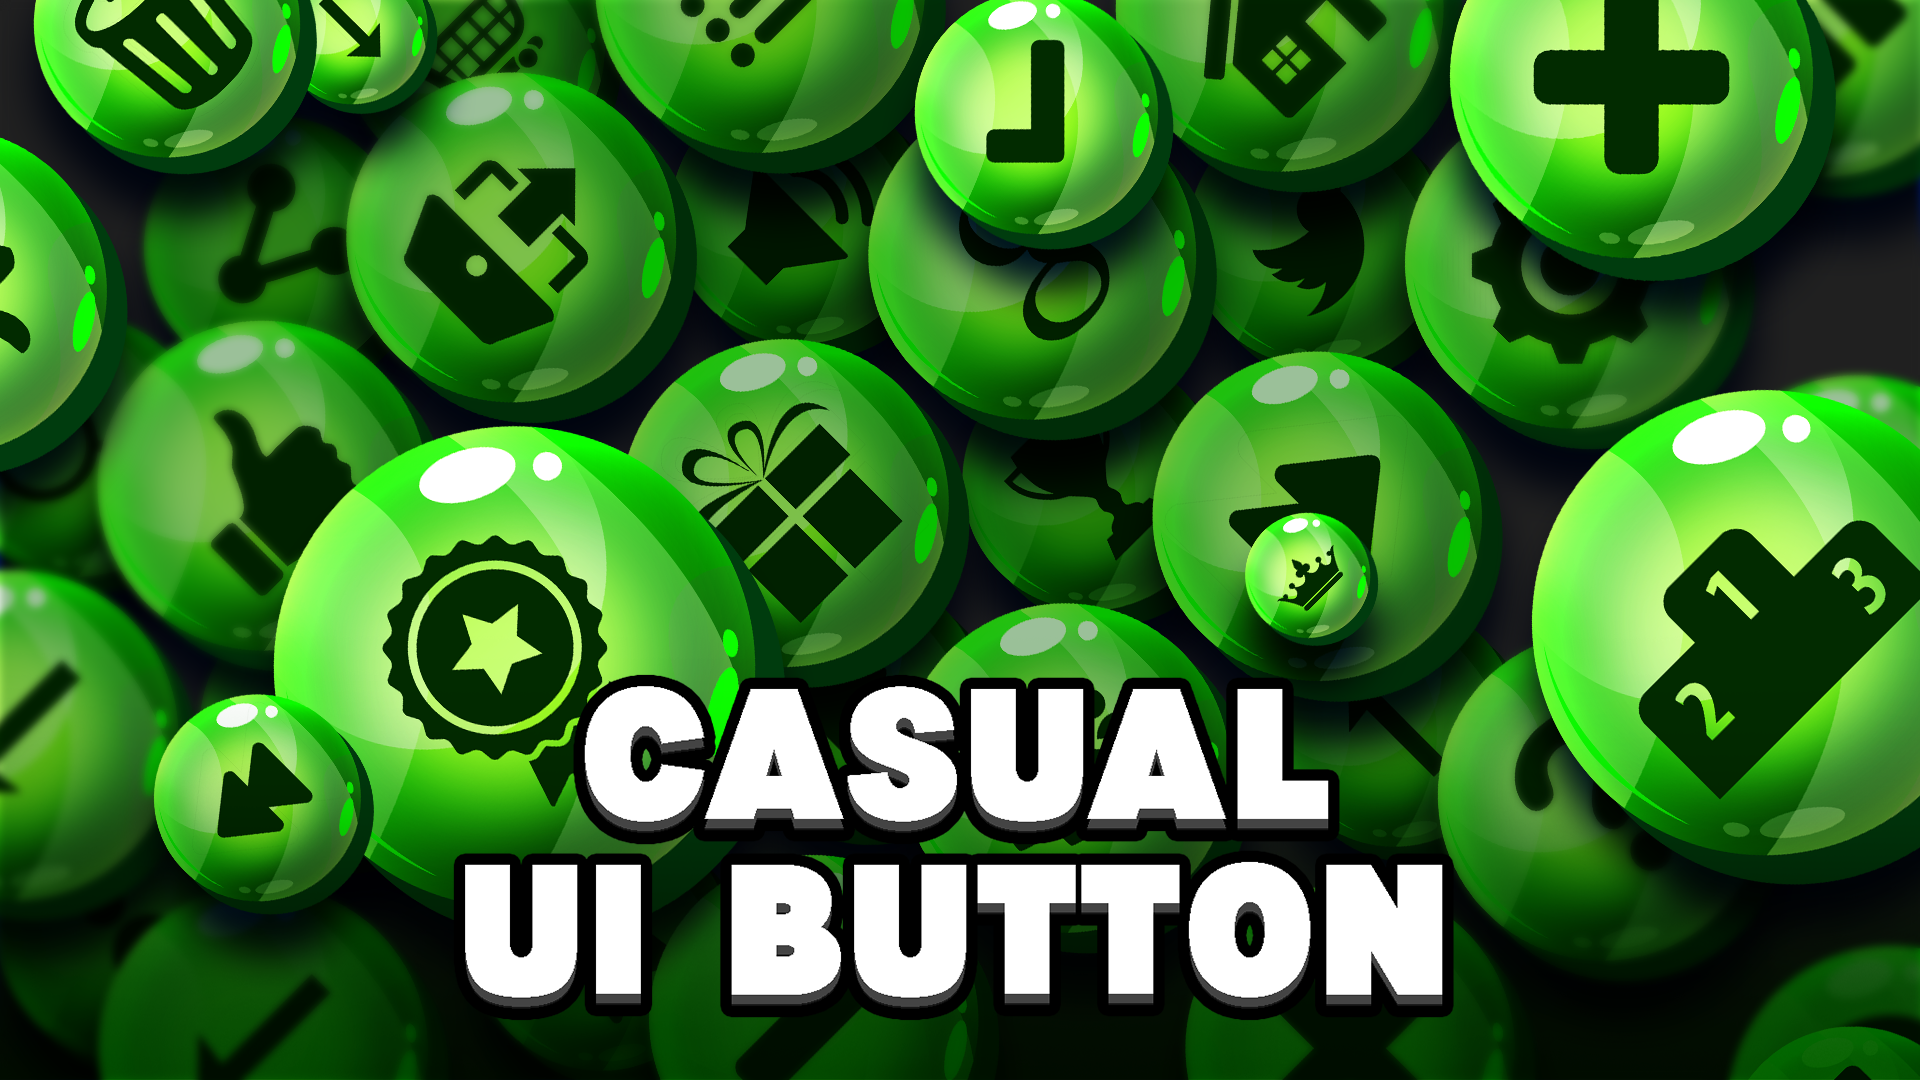 Casual UI Button #5